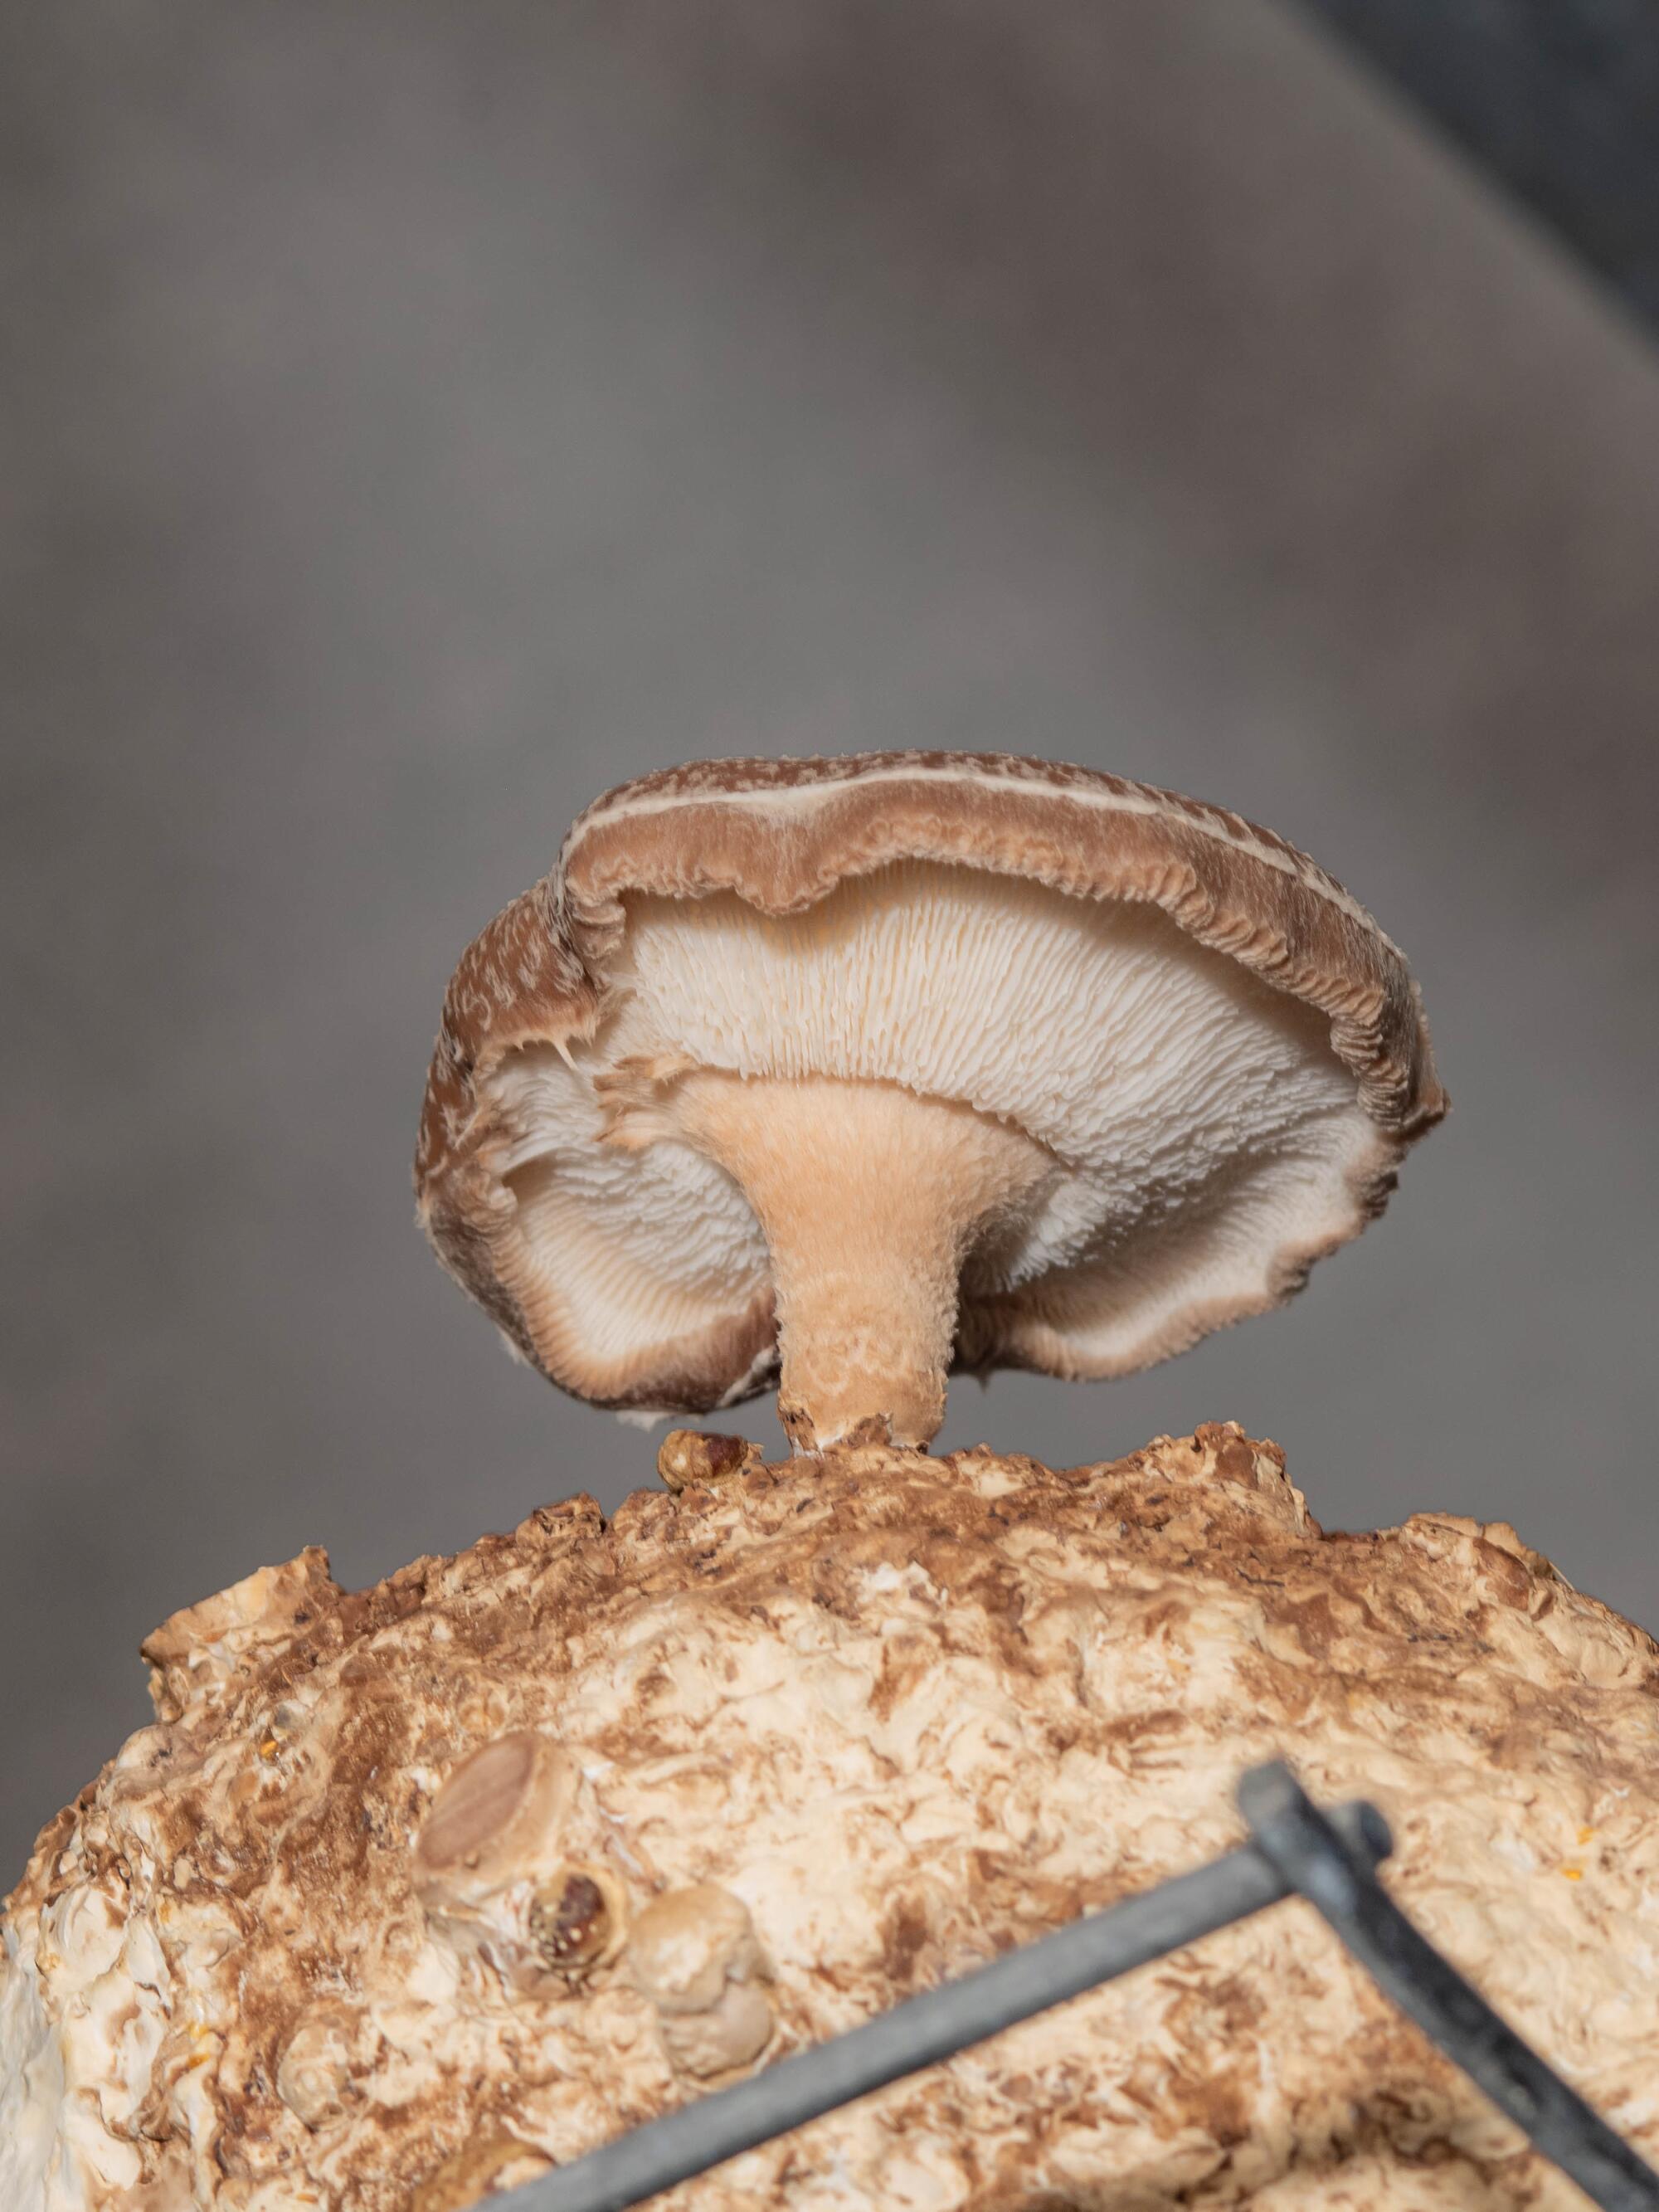 Close-up of a mushroom.